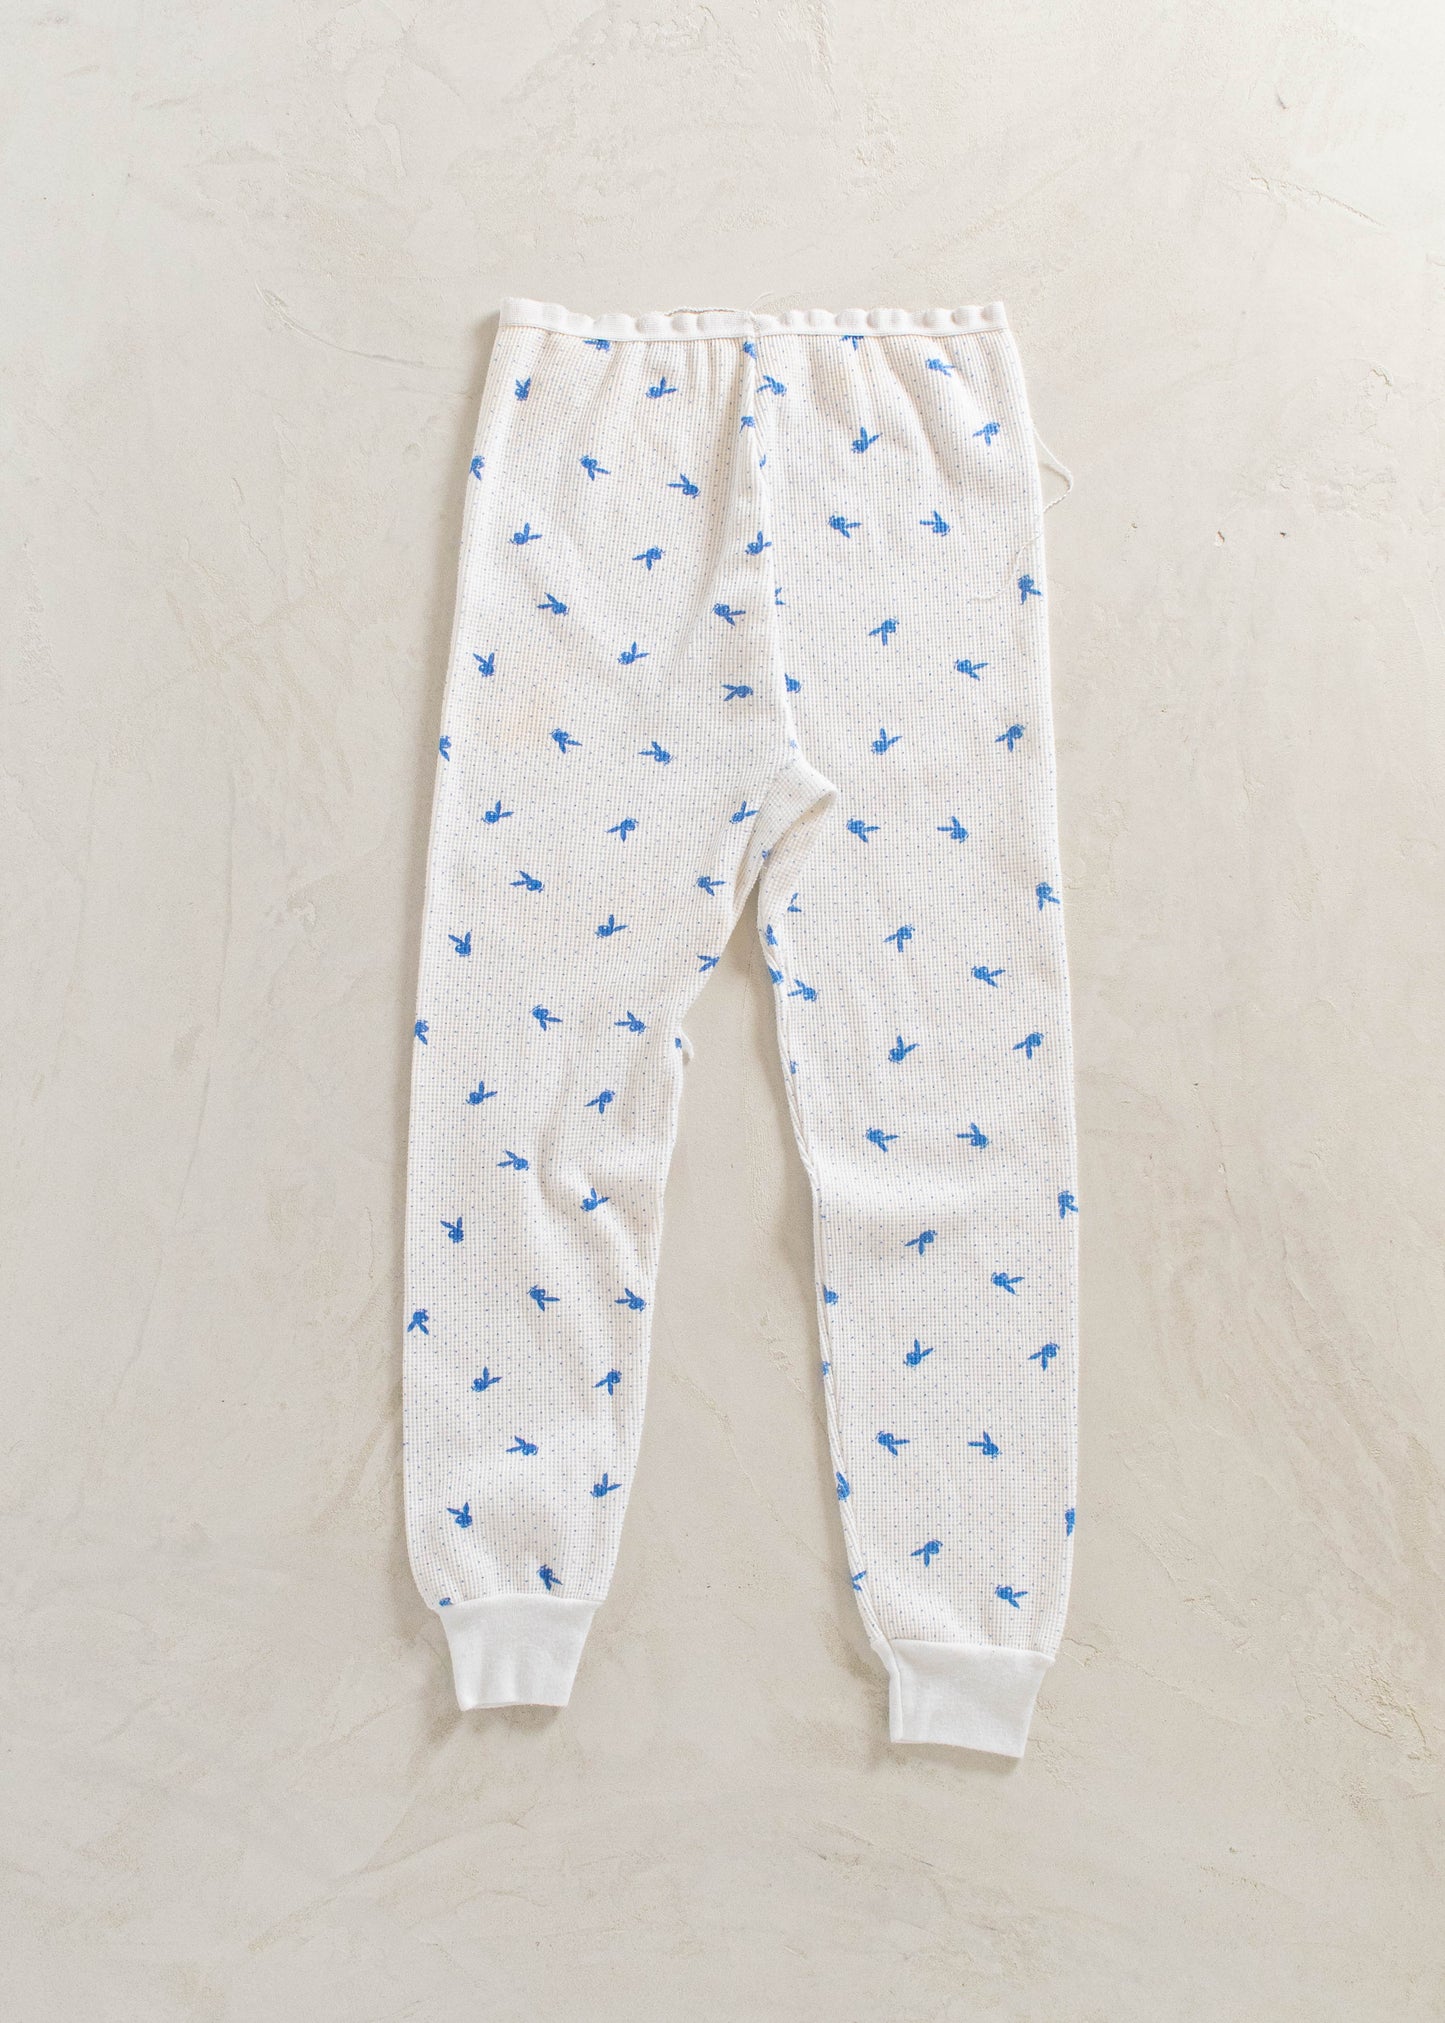 1980s Play Boy Bunny Cotton Long John Pants Size XS/S